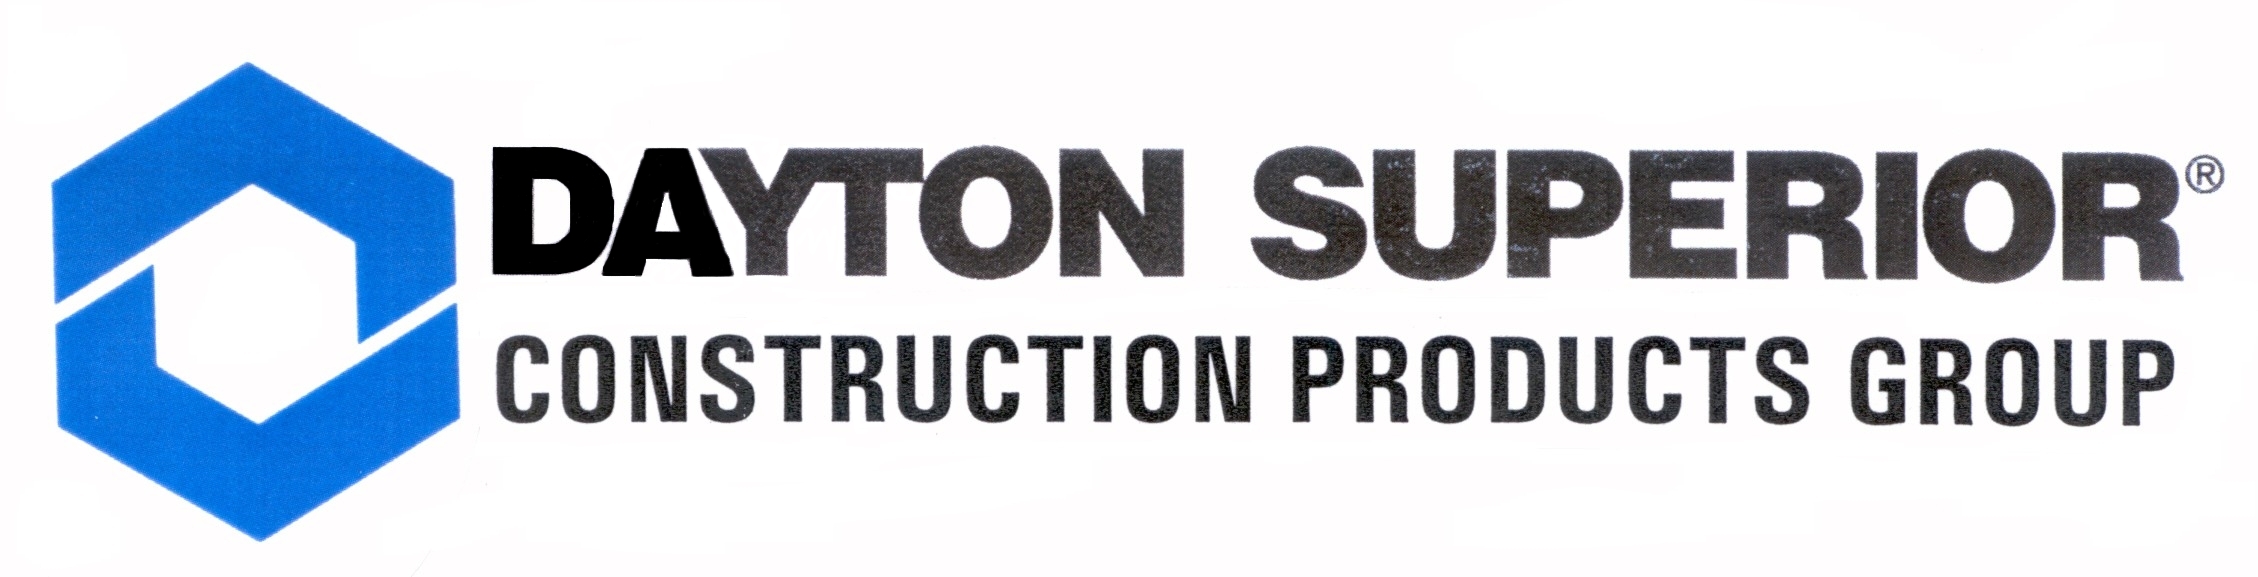 dayton superior logo